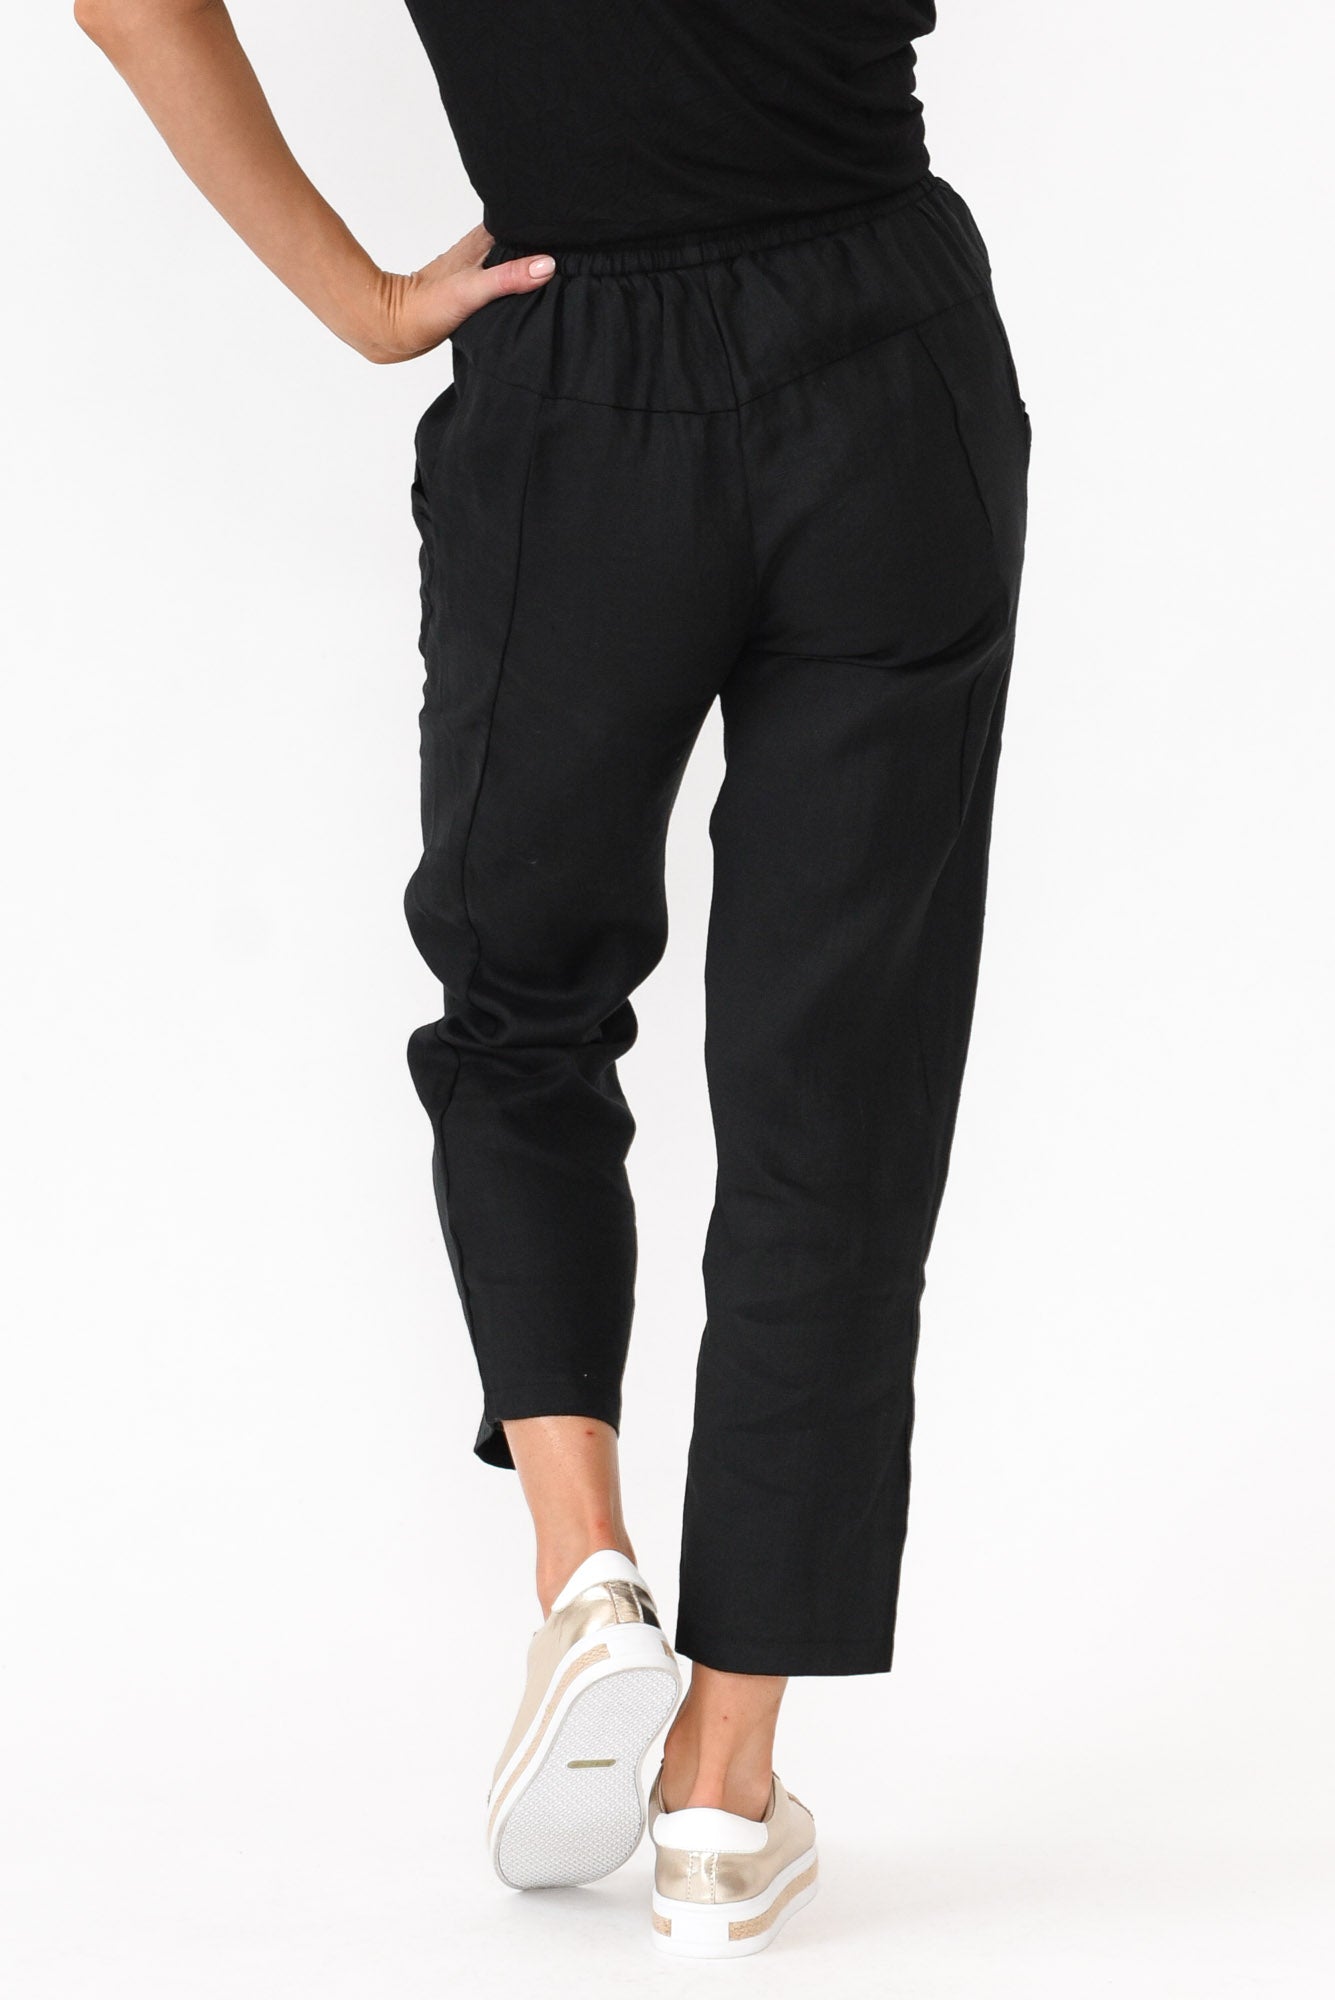 Buy Zpervoba Linen Pants Women Casual Solid Color Summer Pants with Pockets  Comfy Loose Elastic Waist Wide Leg Pants Cotton Linen H01black XLarge  at Amazonin